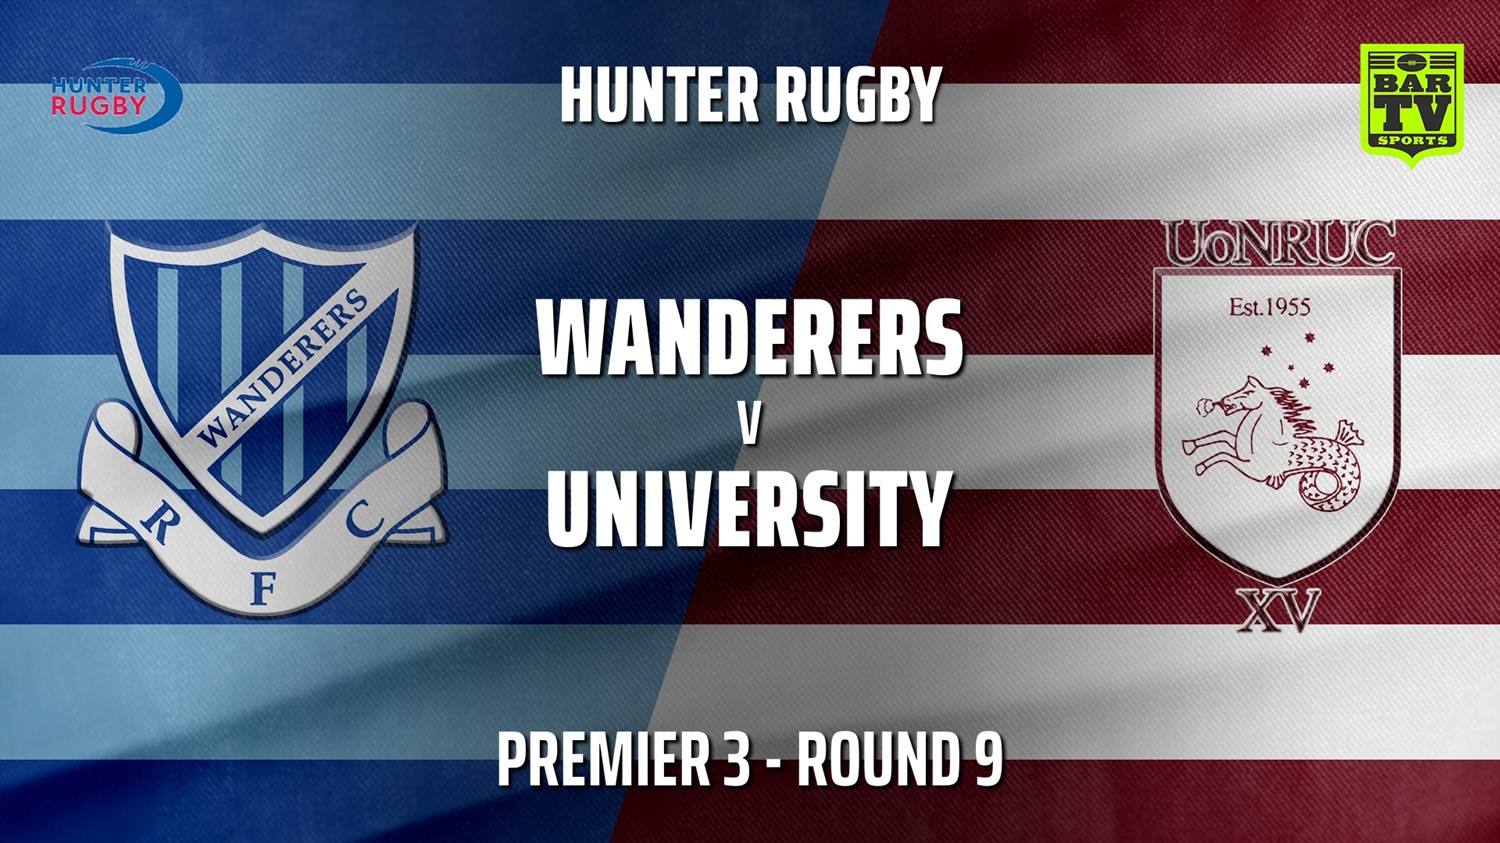 210619-Hunter Rugby Round 9 - Premier 3 - Wanderers v University Of Newcastle Slate Image